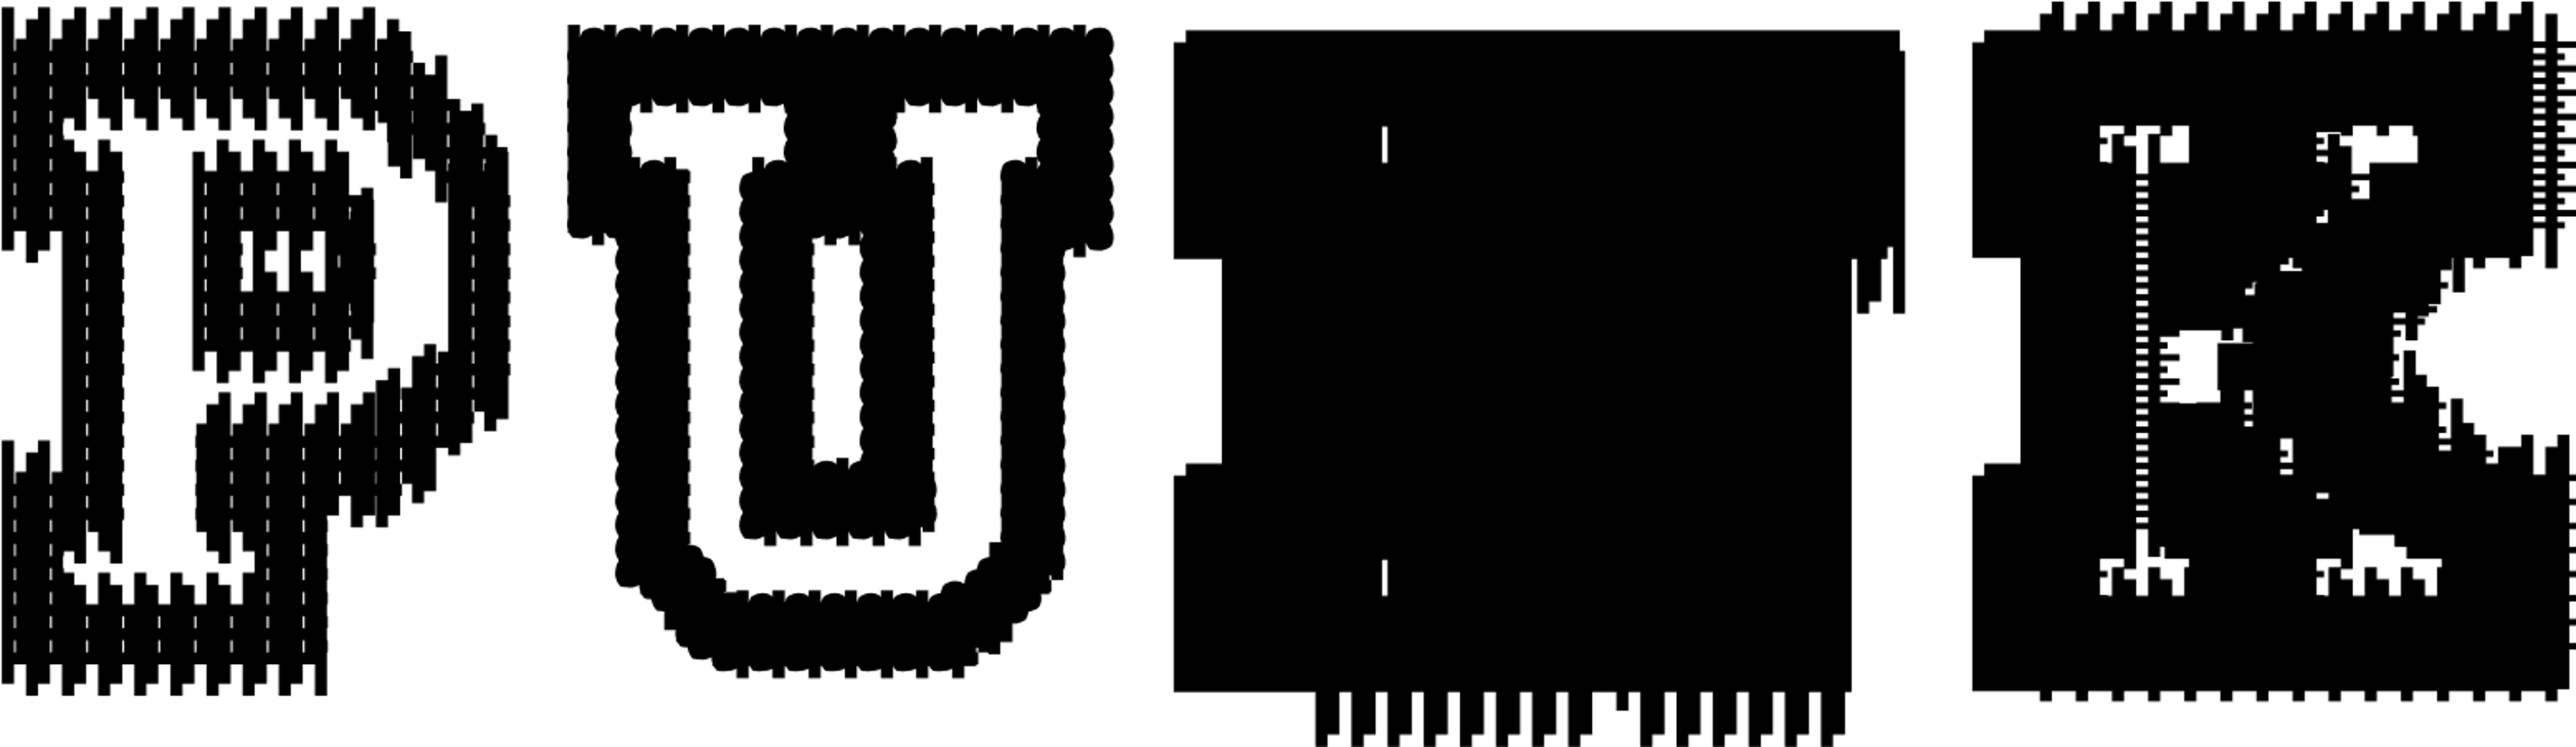 PUNK logo #372